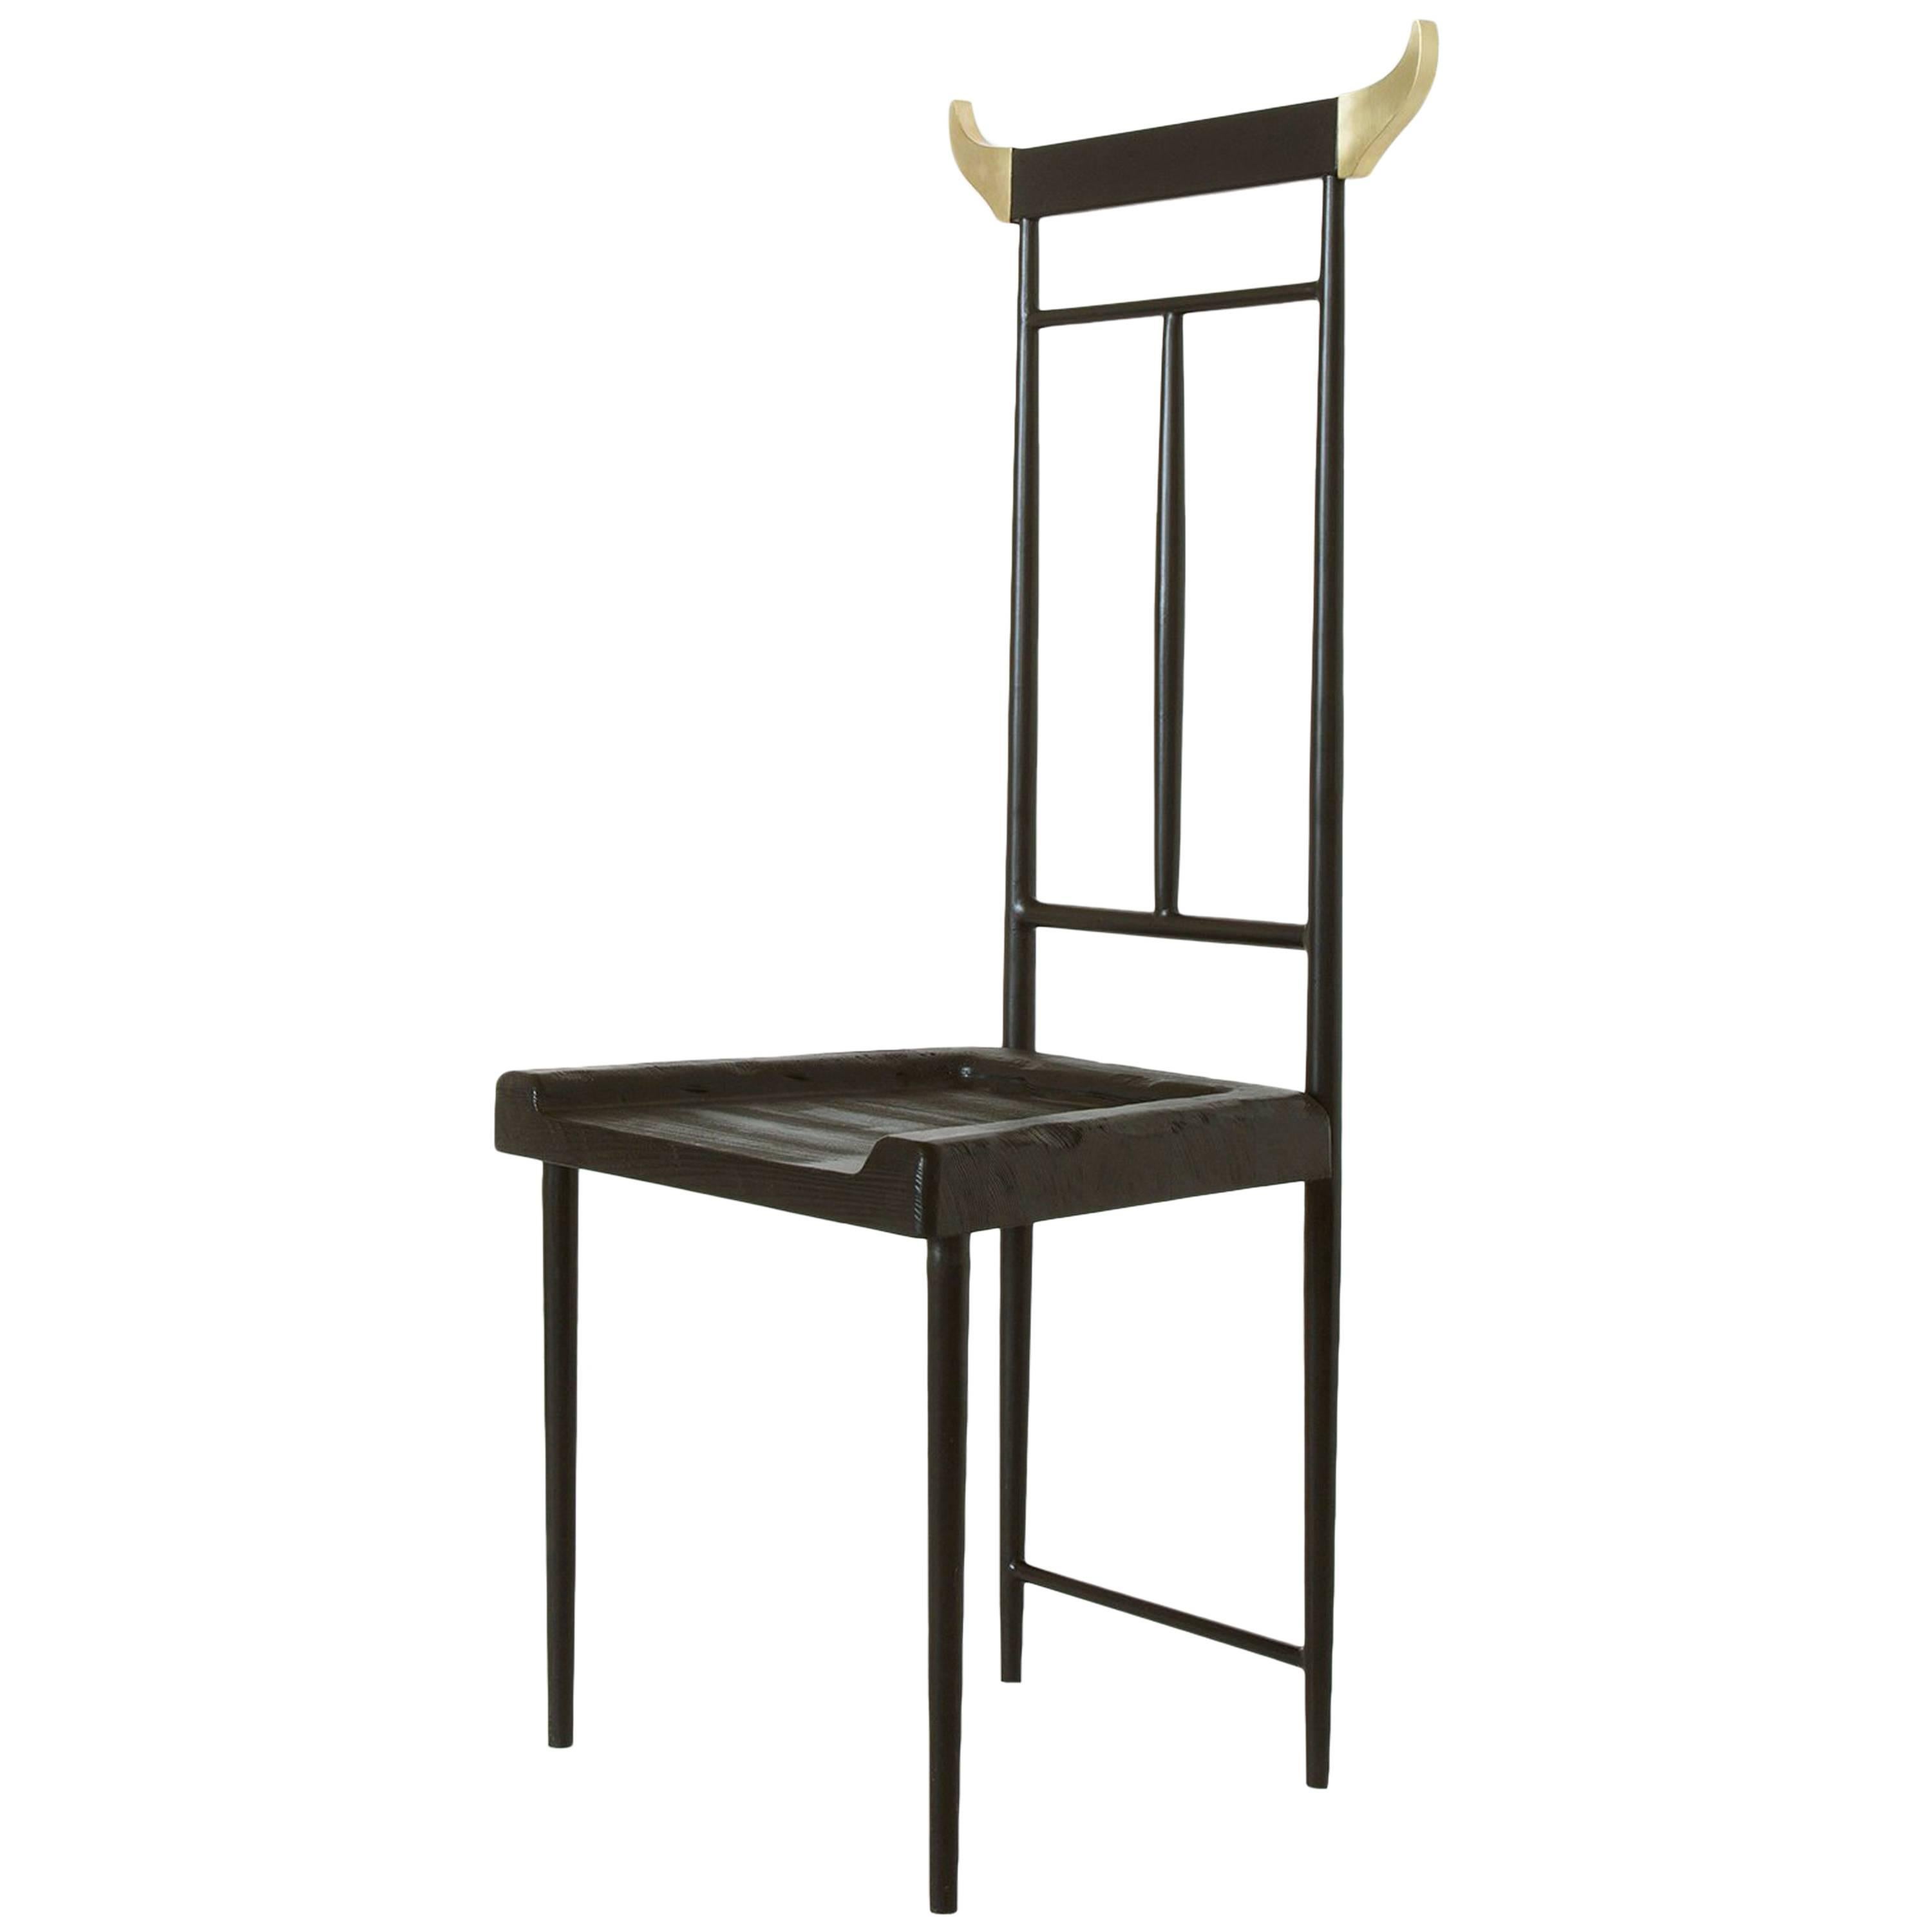 Taurus Brass Chair, Rooms